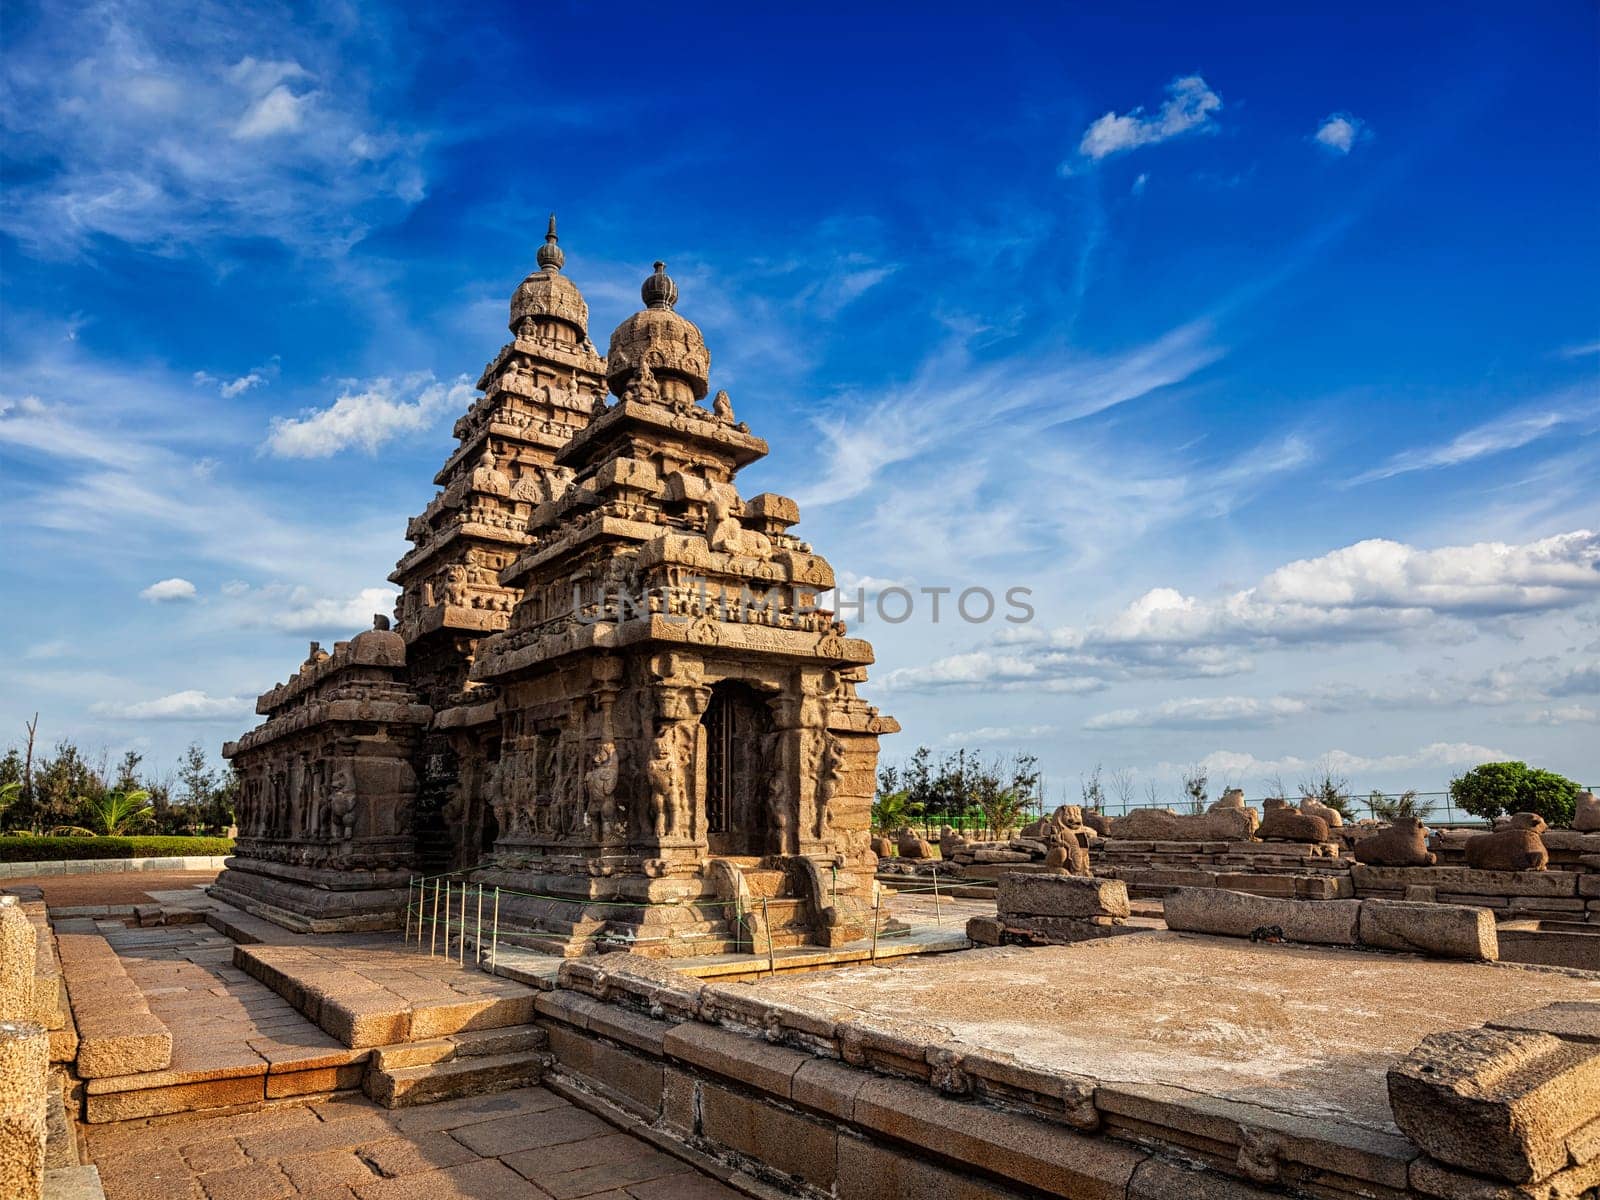 Famous Tamil Nadu landmark - Shore temple, world heritage site in Mahabalipuram, Tamil Nadu, India